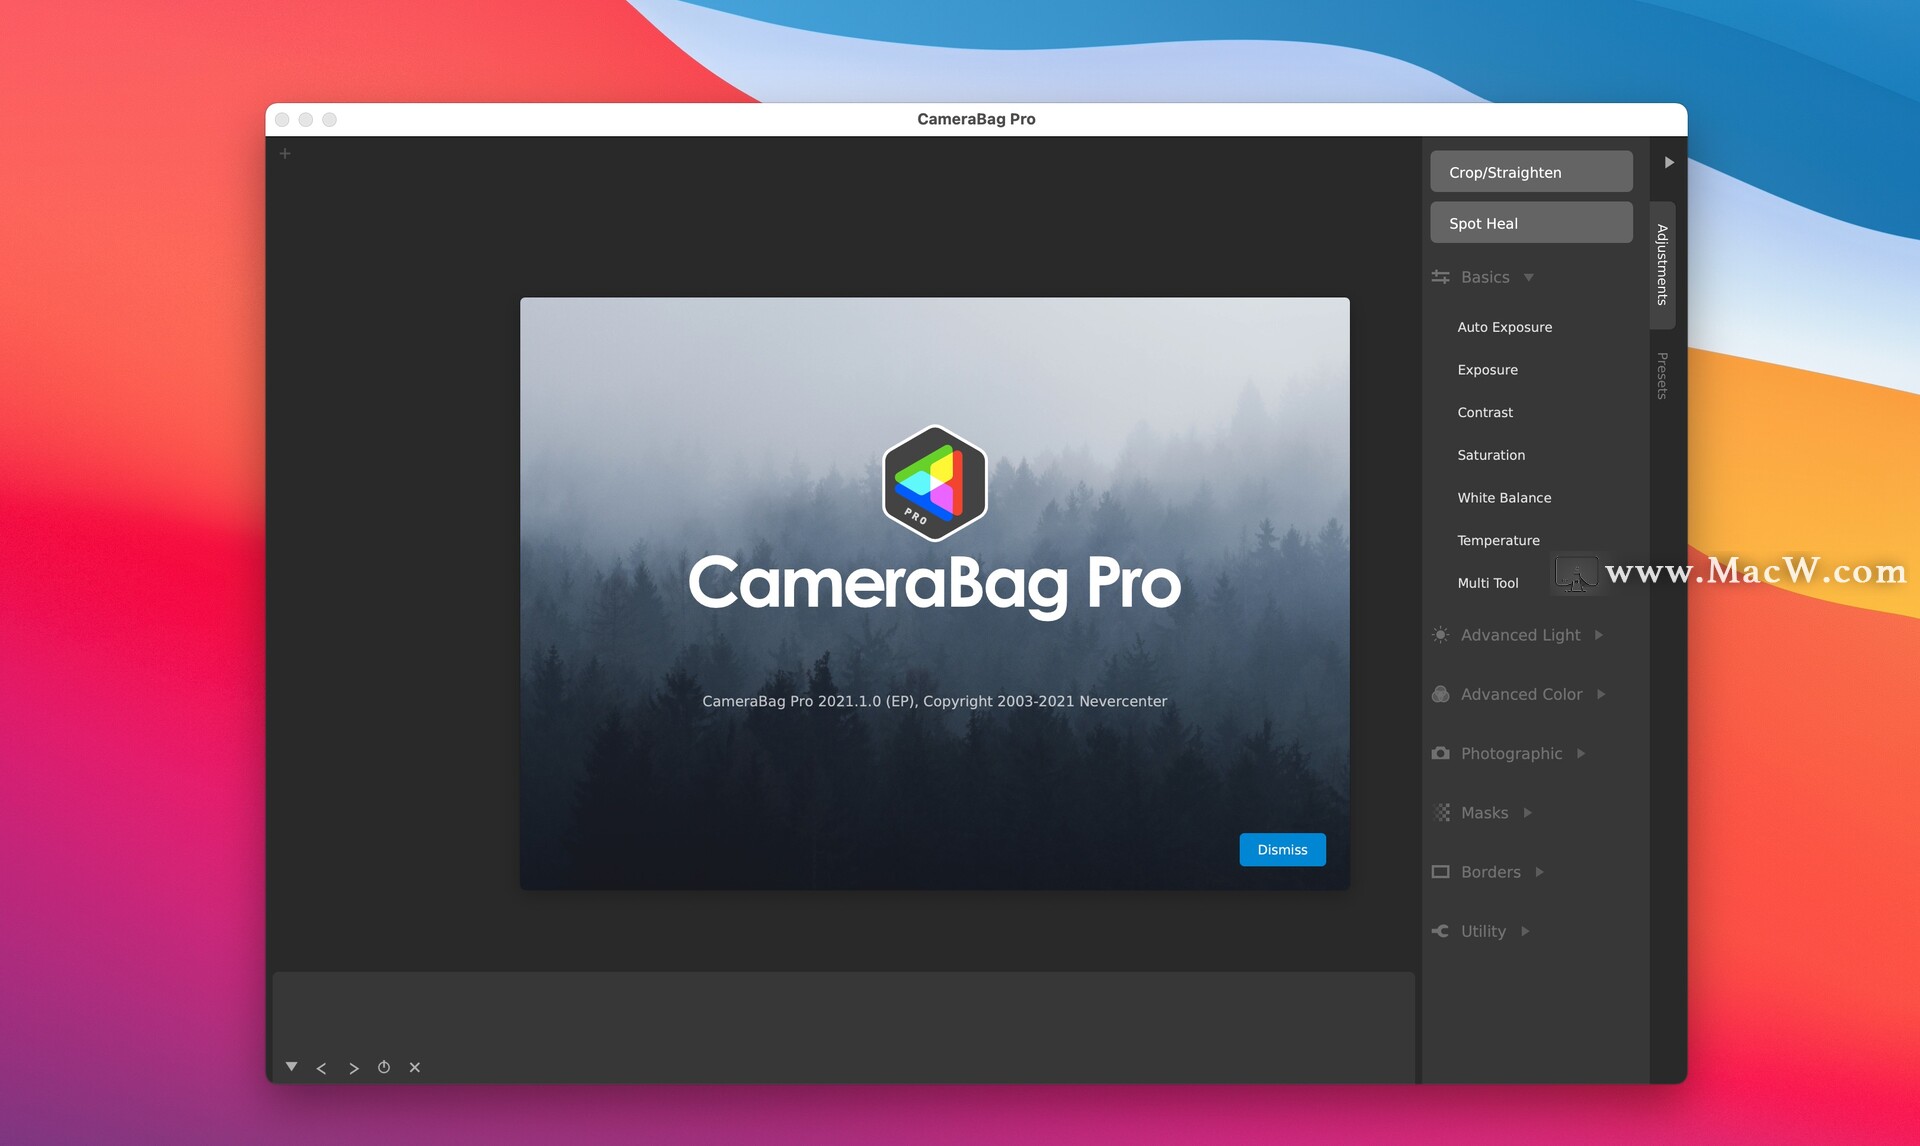 CameraBag Pro download the last version for ipod